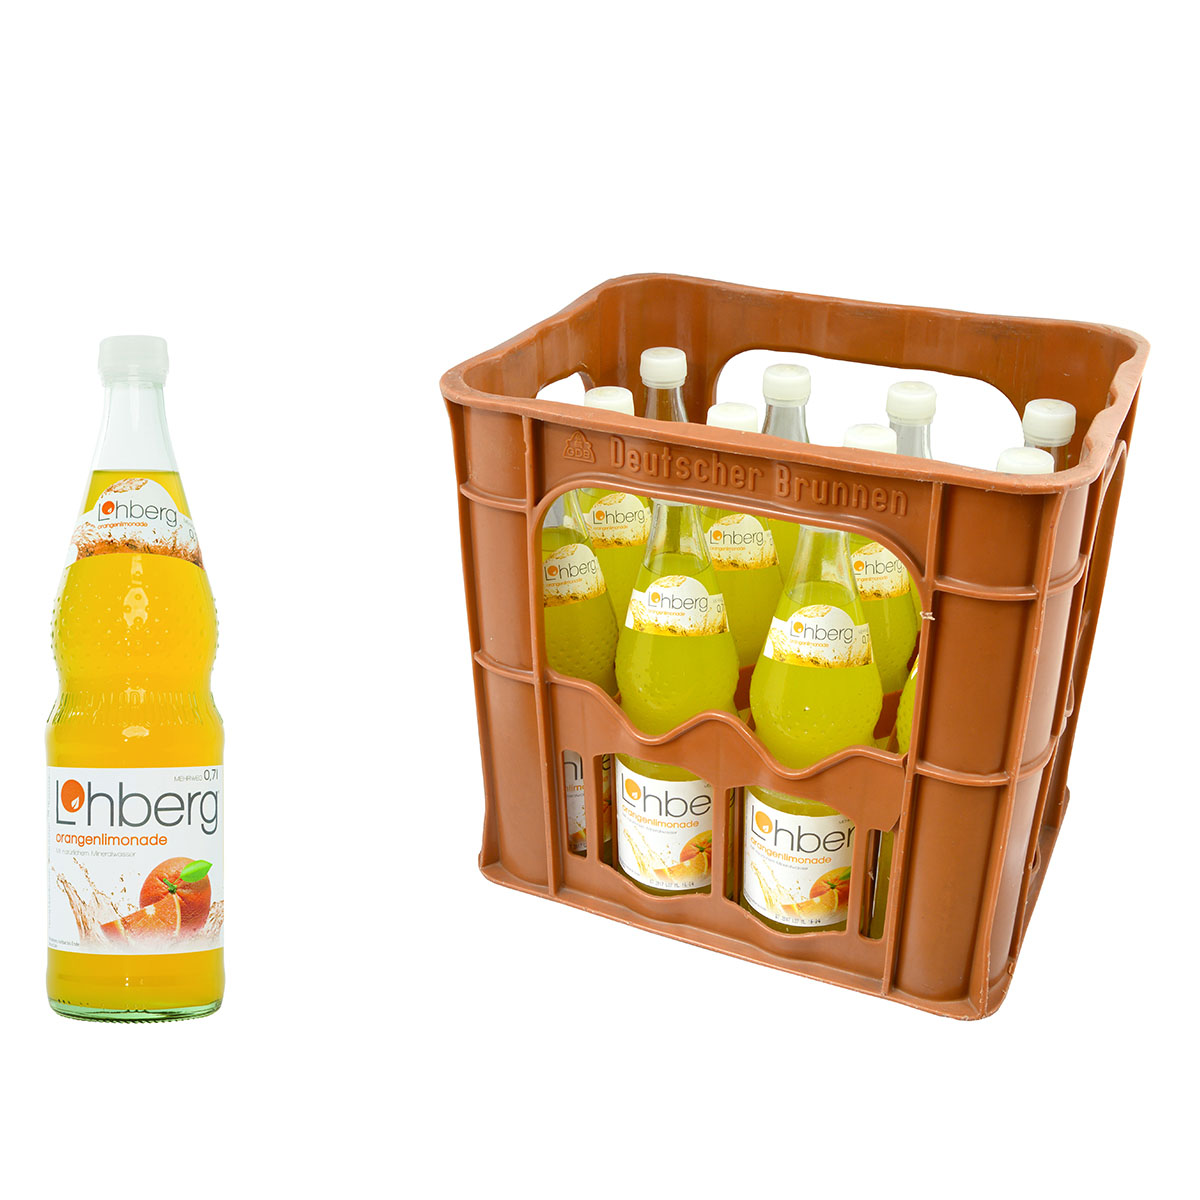 Lohberg Orangenlimonade 12 x 0,7l Glas Kiste | Banach Getränkeshop